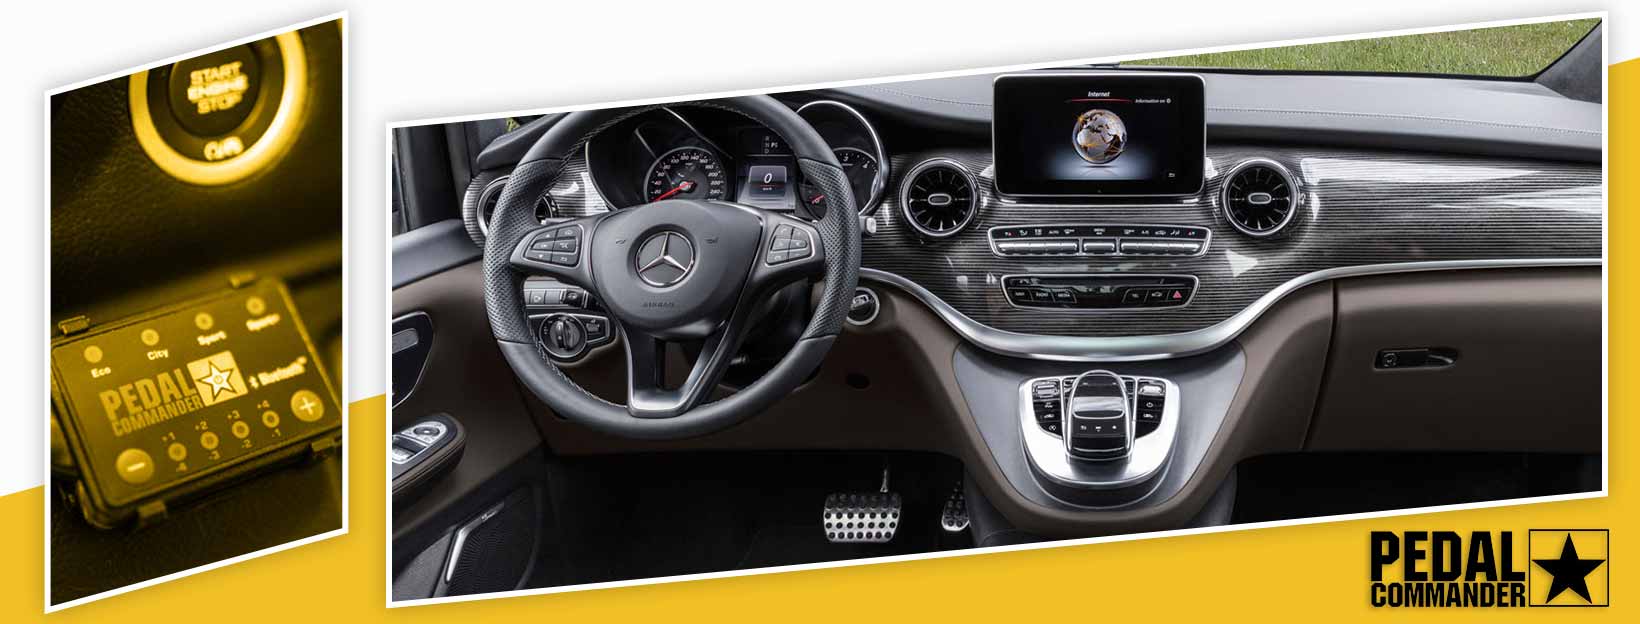 Pedal Commander for Mercedes Metris - interior